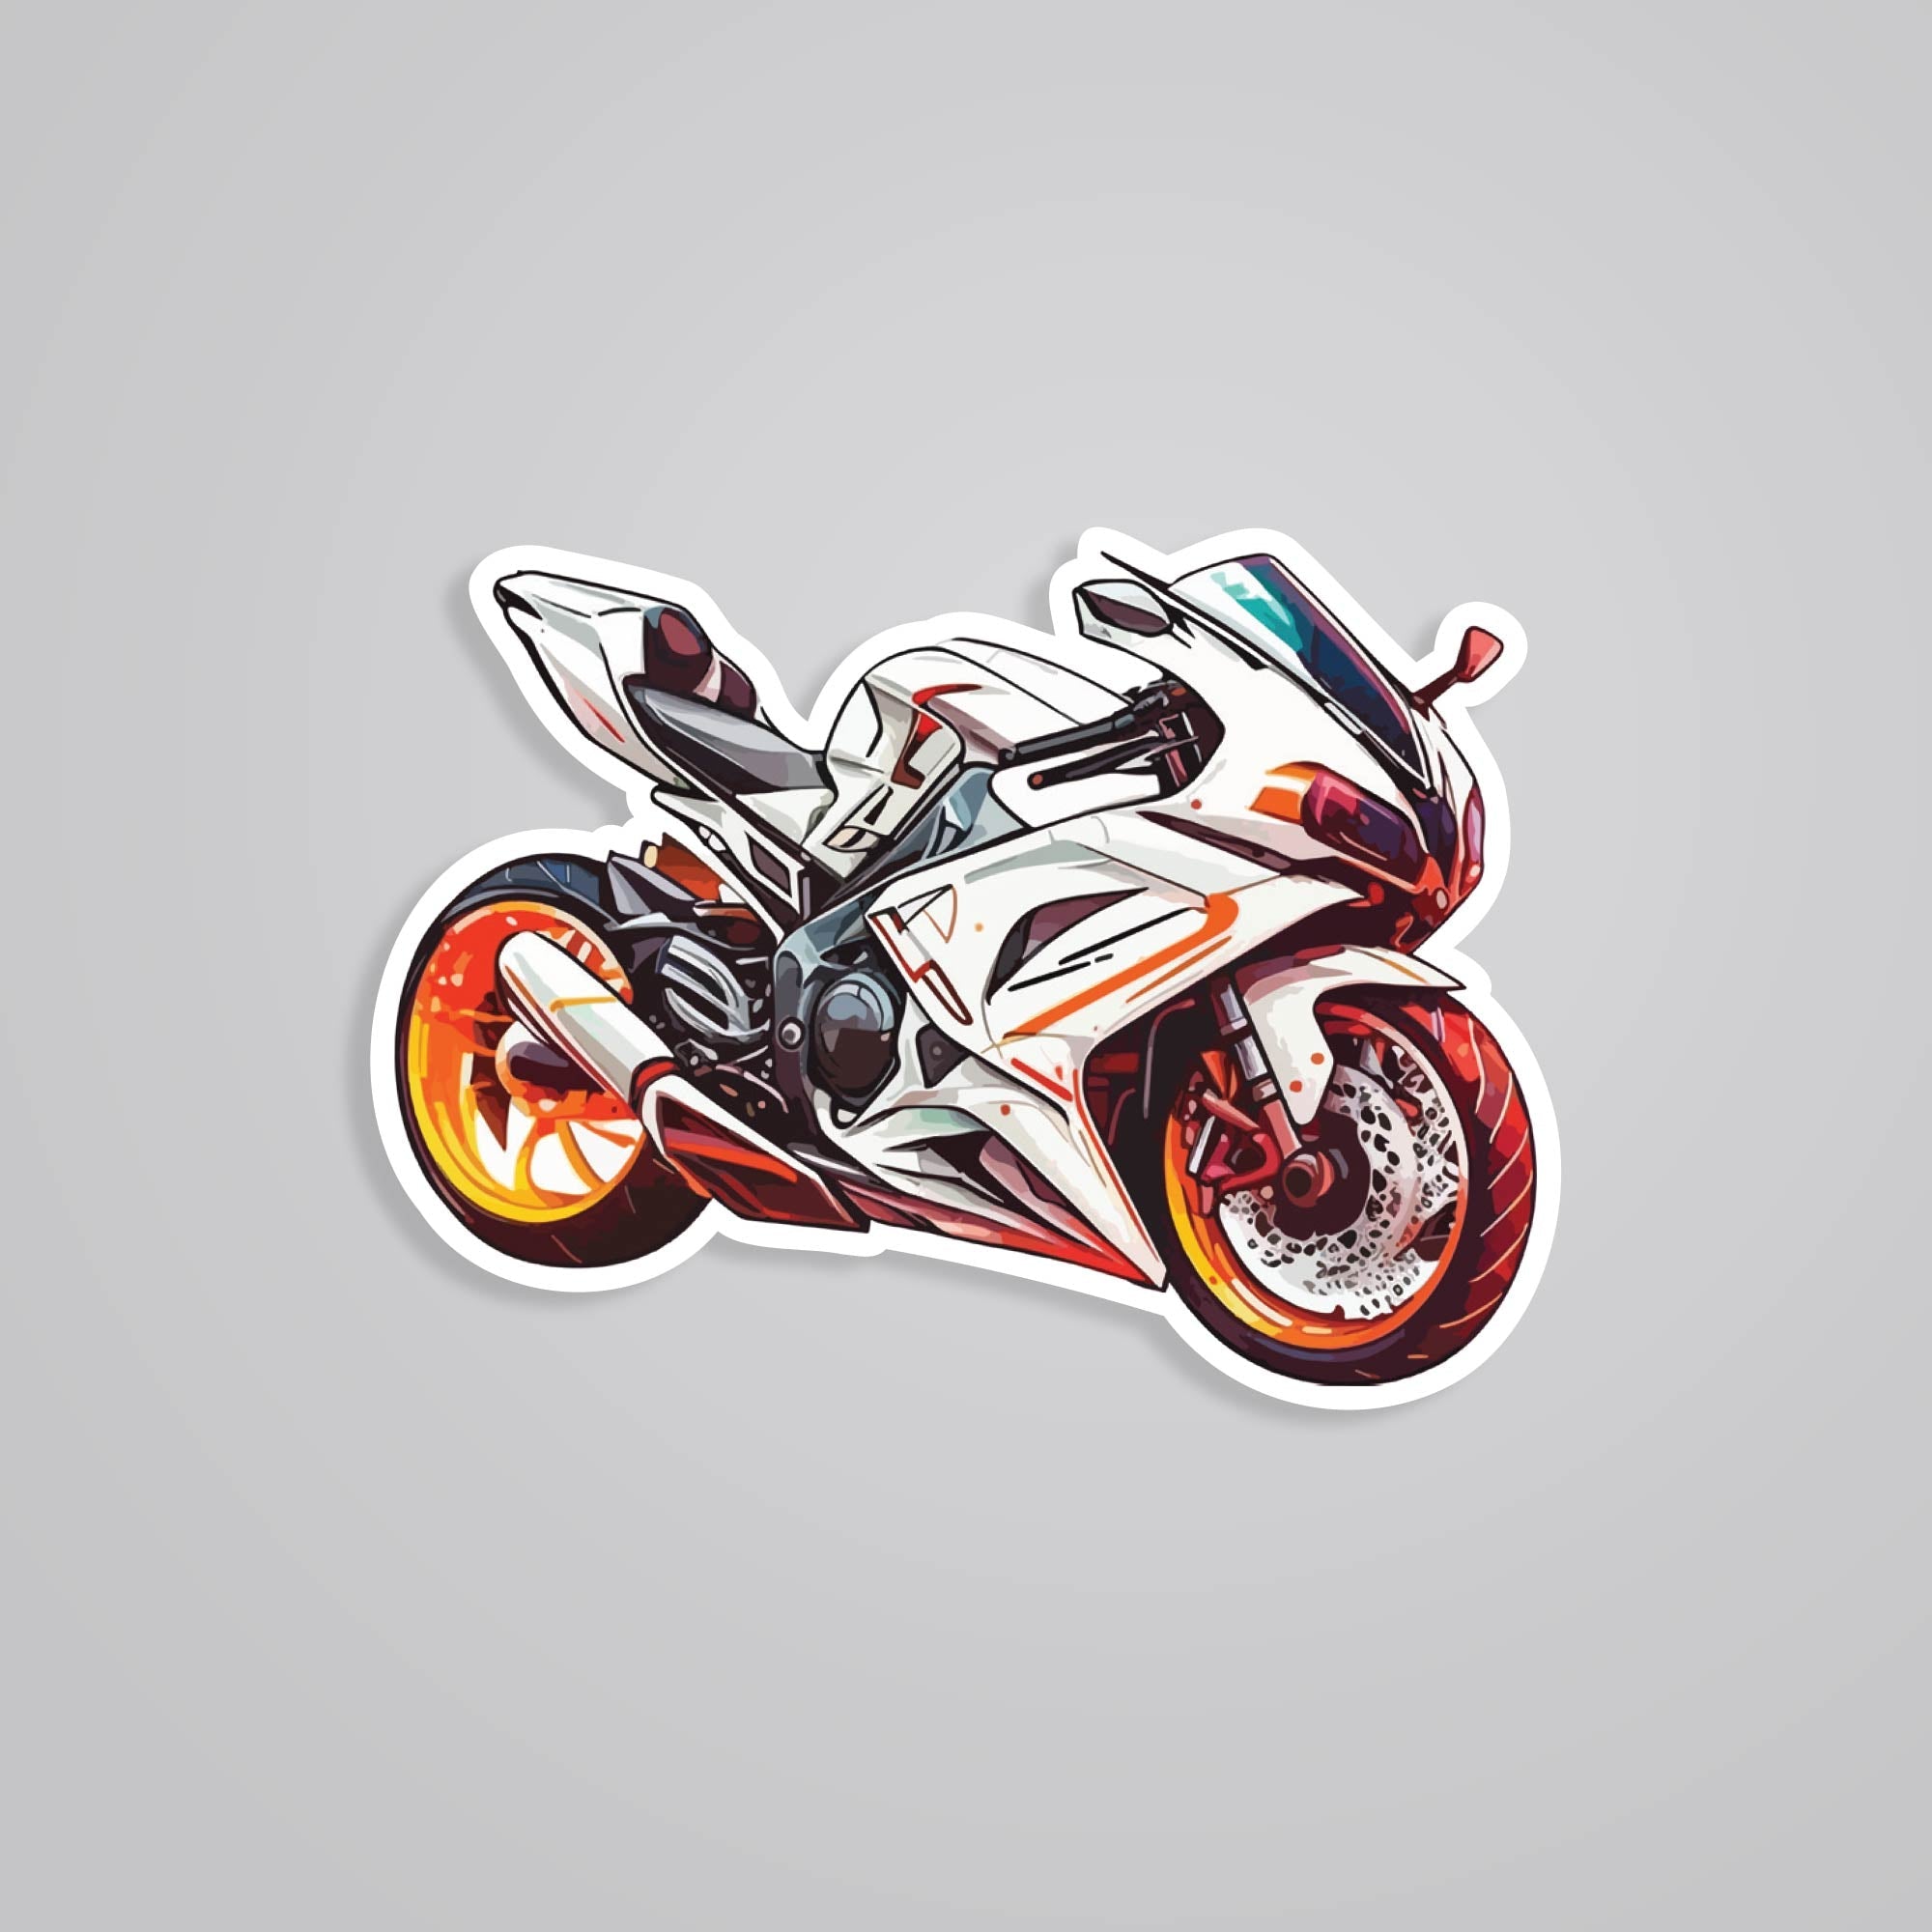 Fomo Store Stickers Cars & Bikes Orange and White Motorcycle